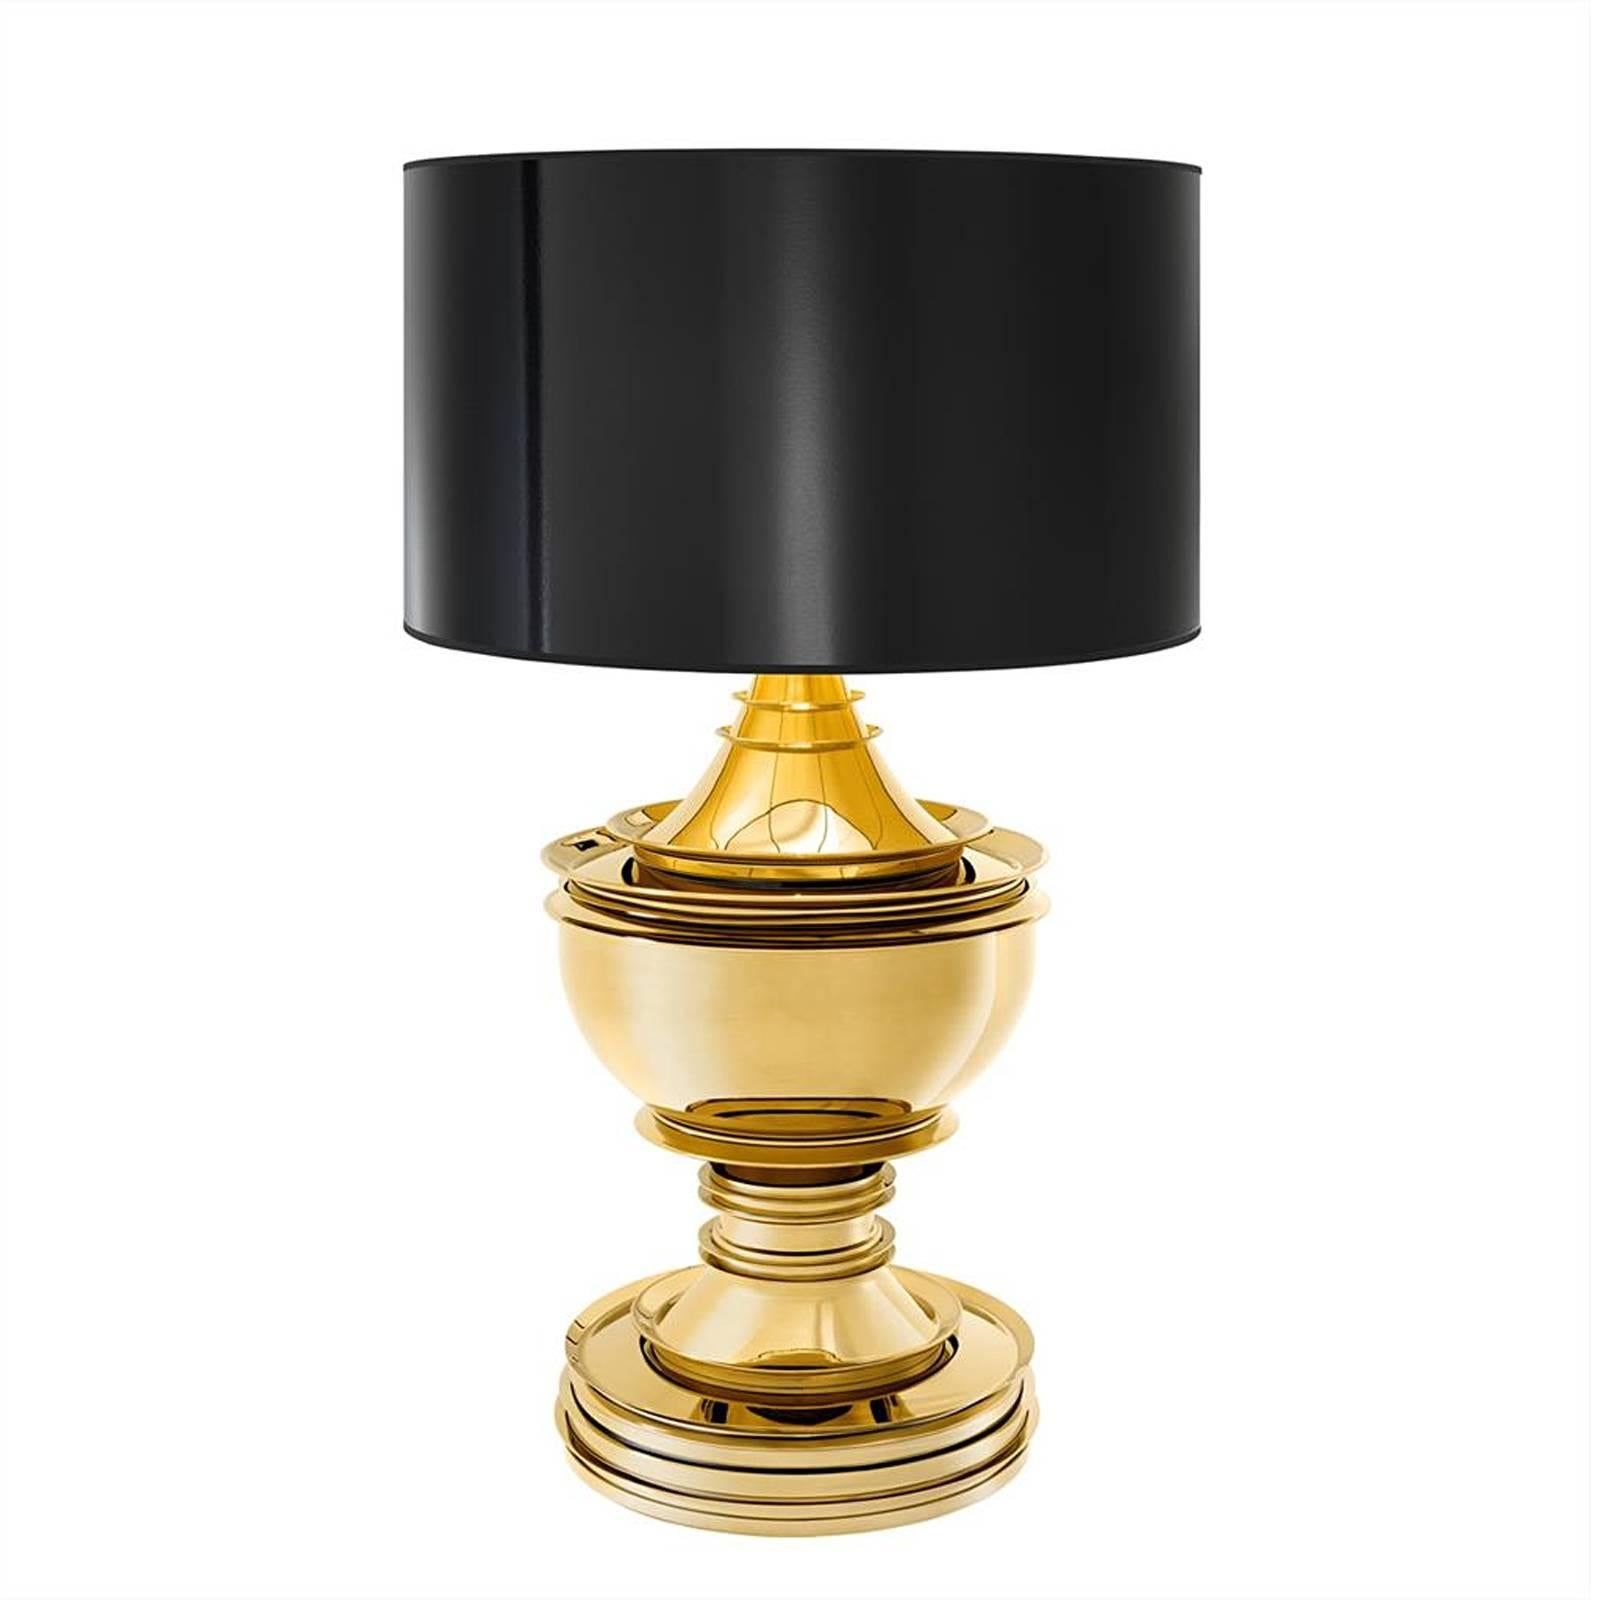 Table lamp Royal Gold in gold finish
with high gloss black shade. 1 bulb lamp
holder type E27, maximum 40 watt.
